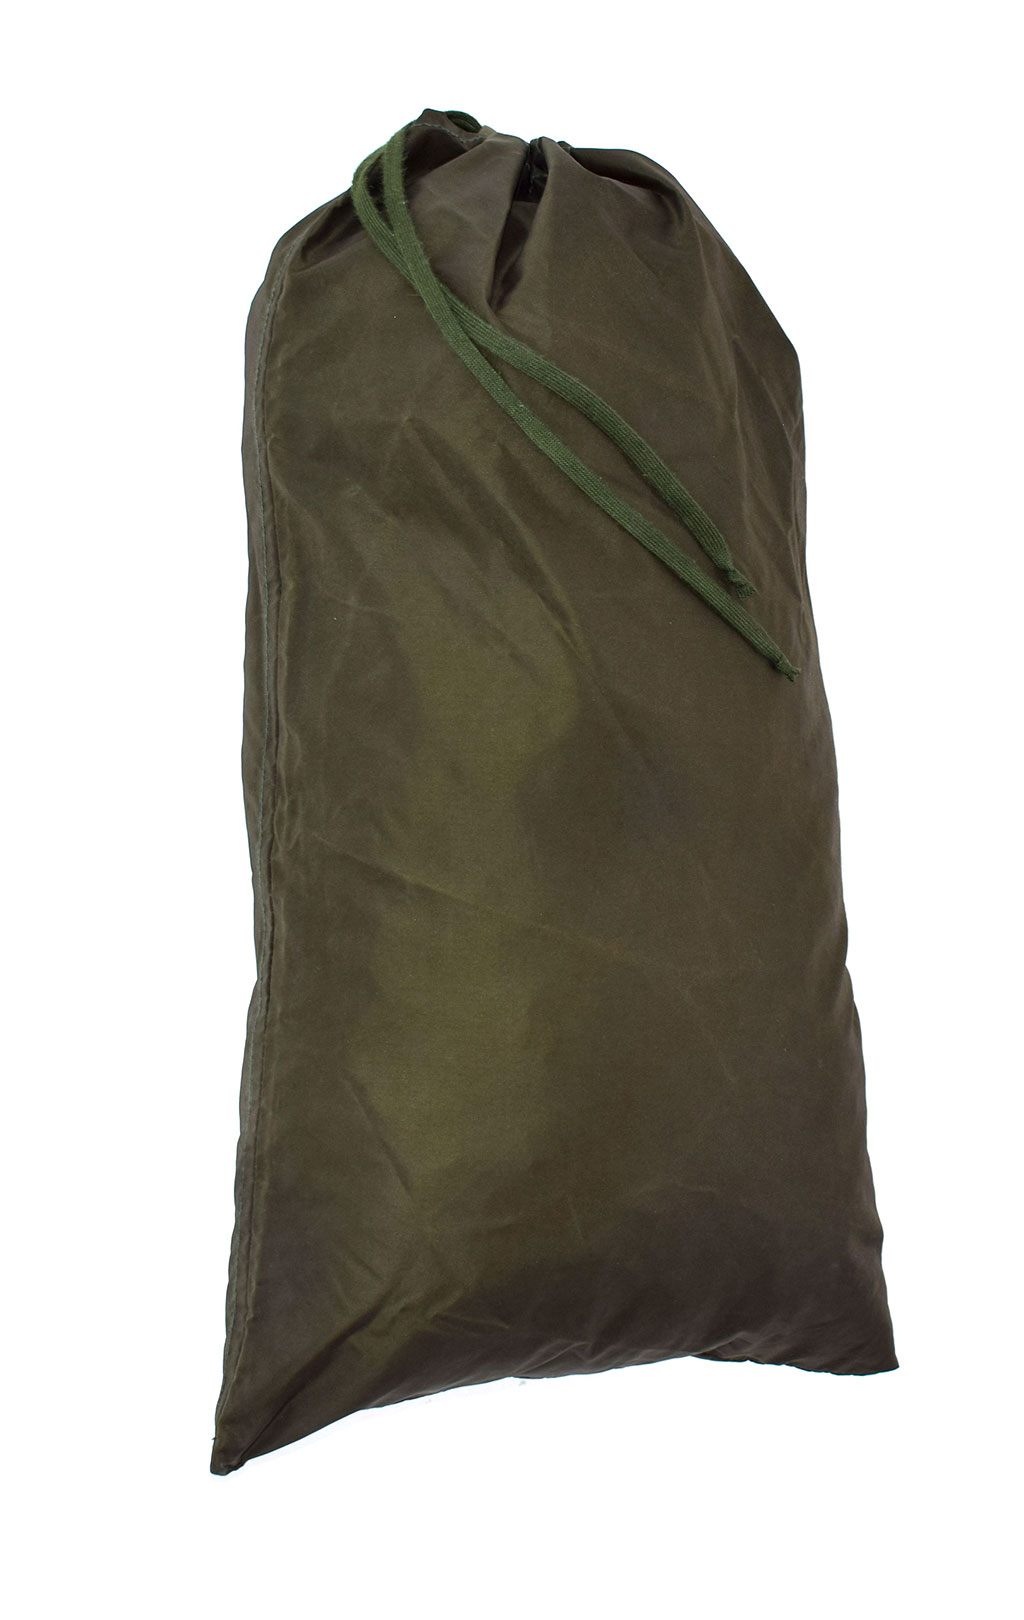 Мешок непромокаемый Bag Insertion Pouch olive б/у США